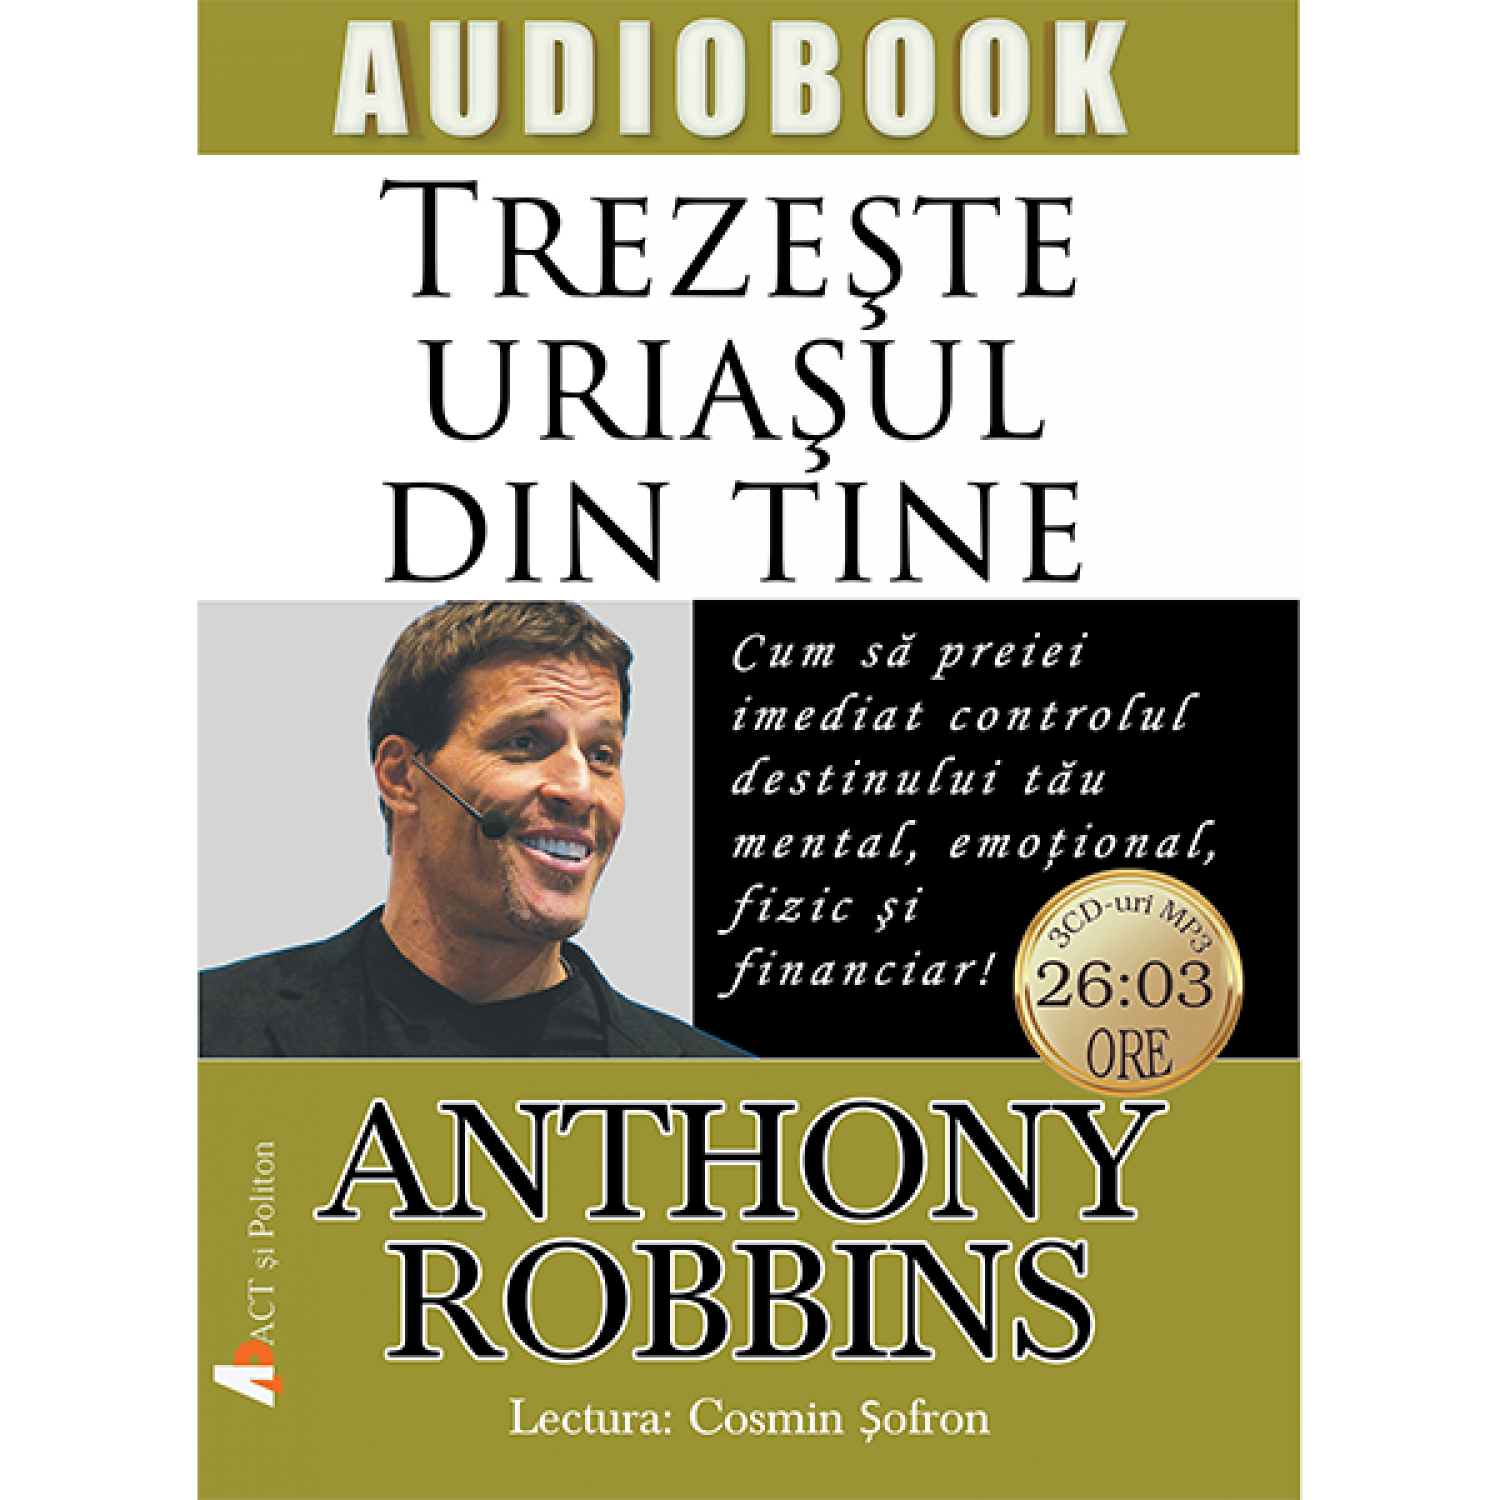 Trezeste uriasul din tine – Audiobook | Anthony Robbins Anthony Robbins poza bestsellers.ro